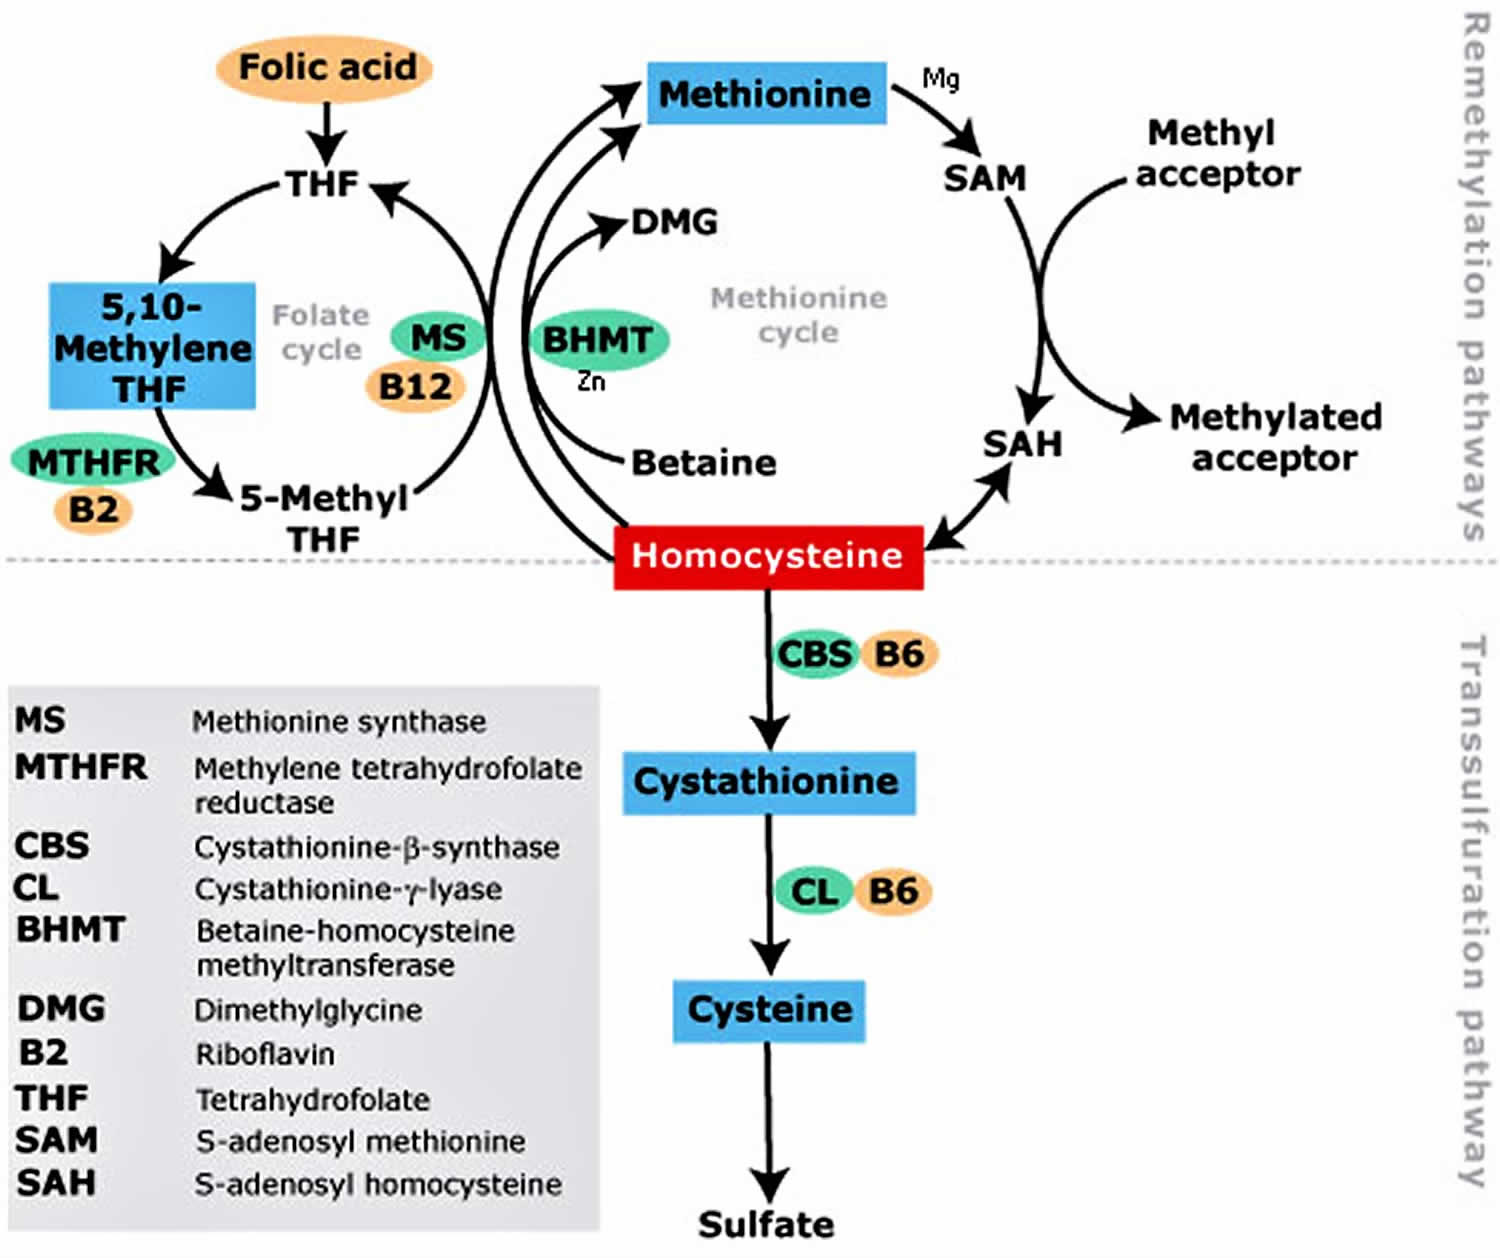 Homocysteine metabolism